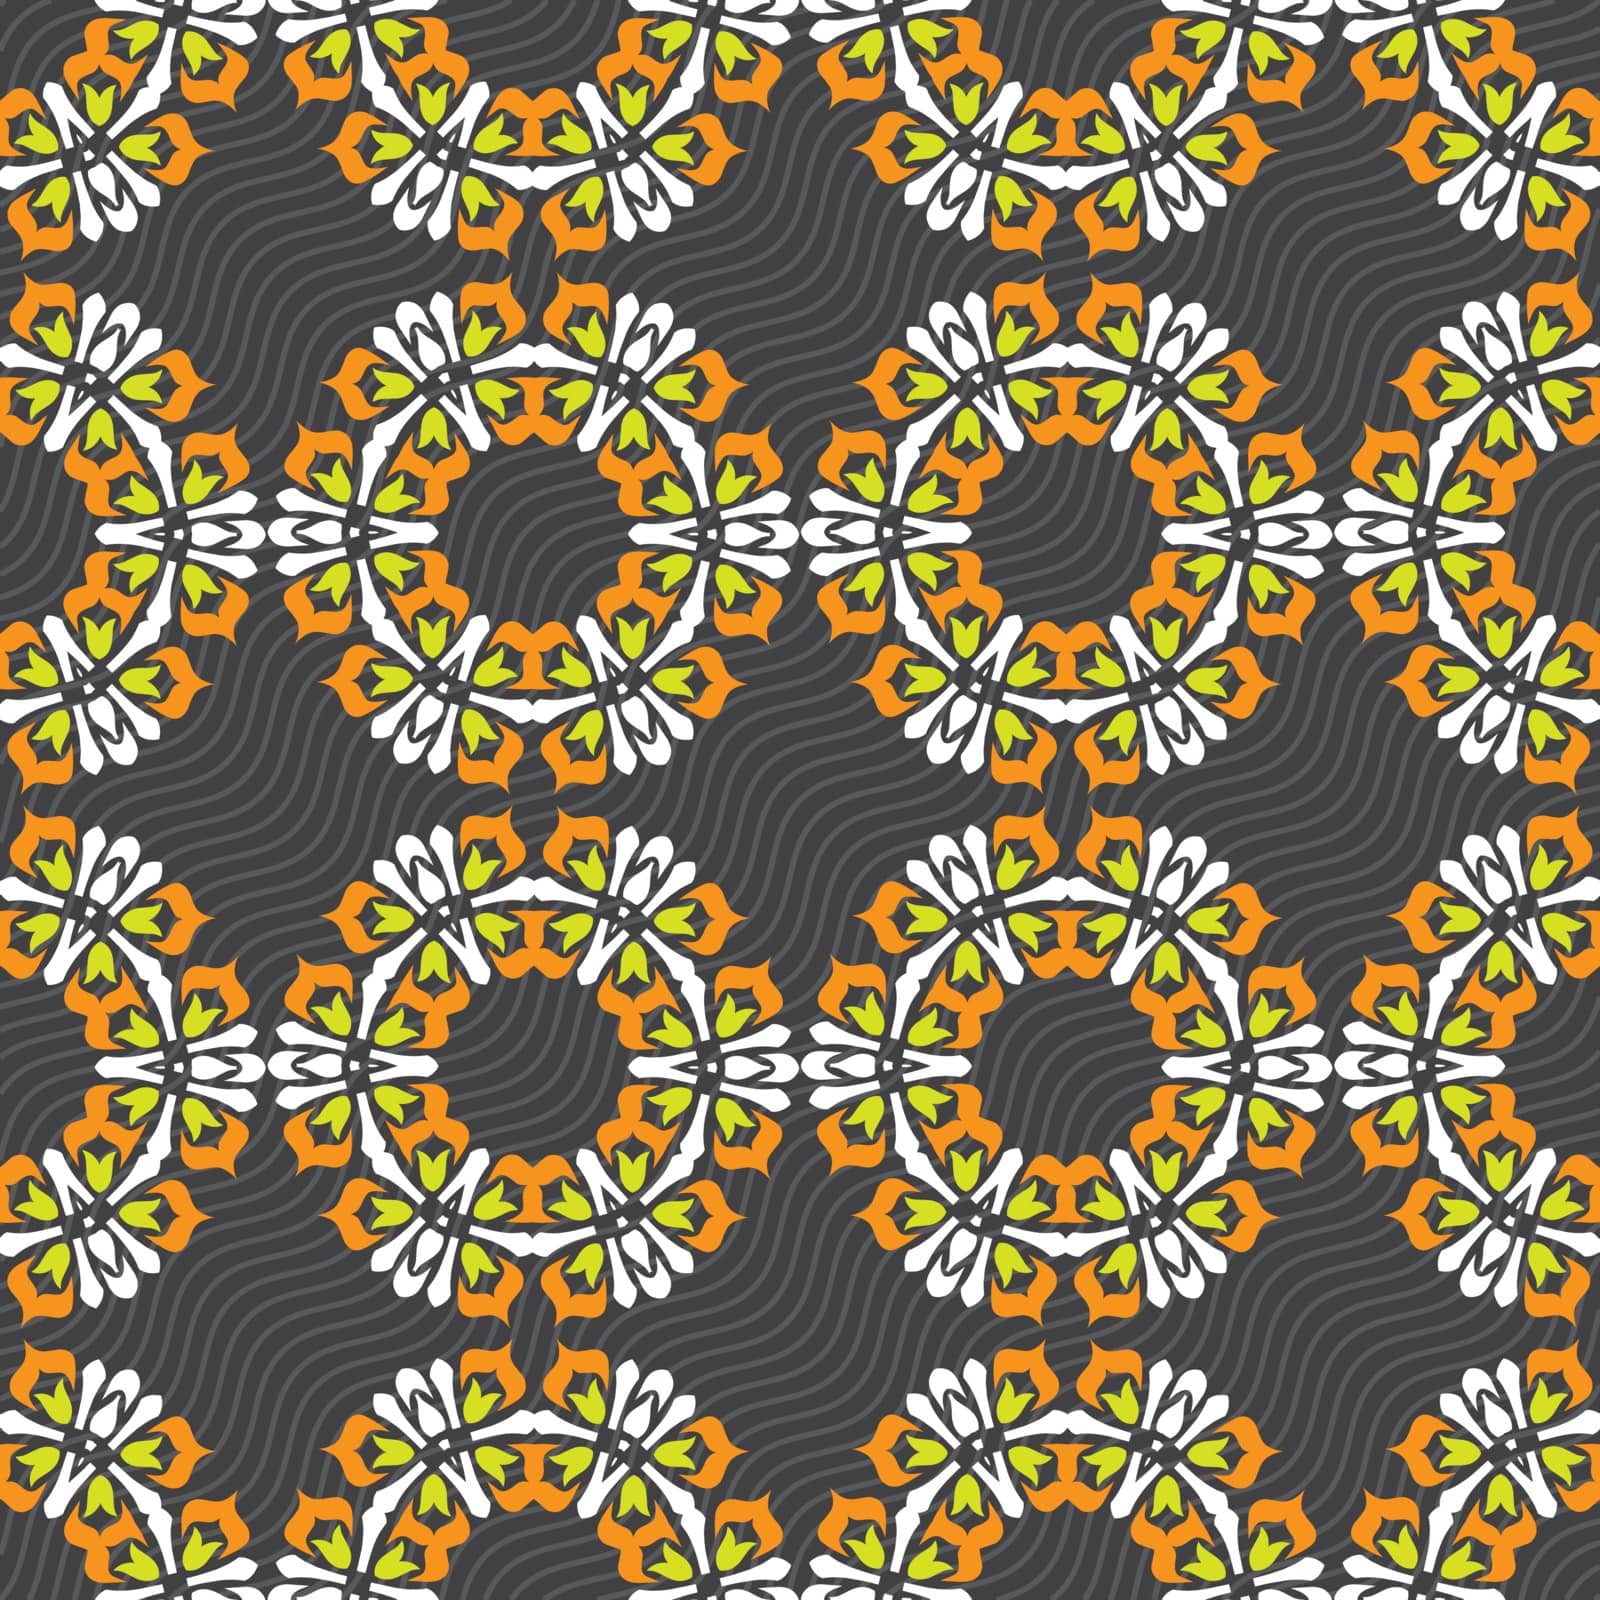 Ornament pattern vector tile for multipurpose use in design